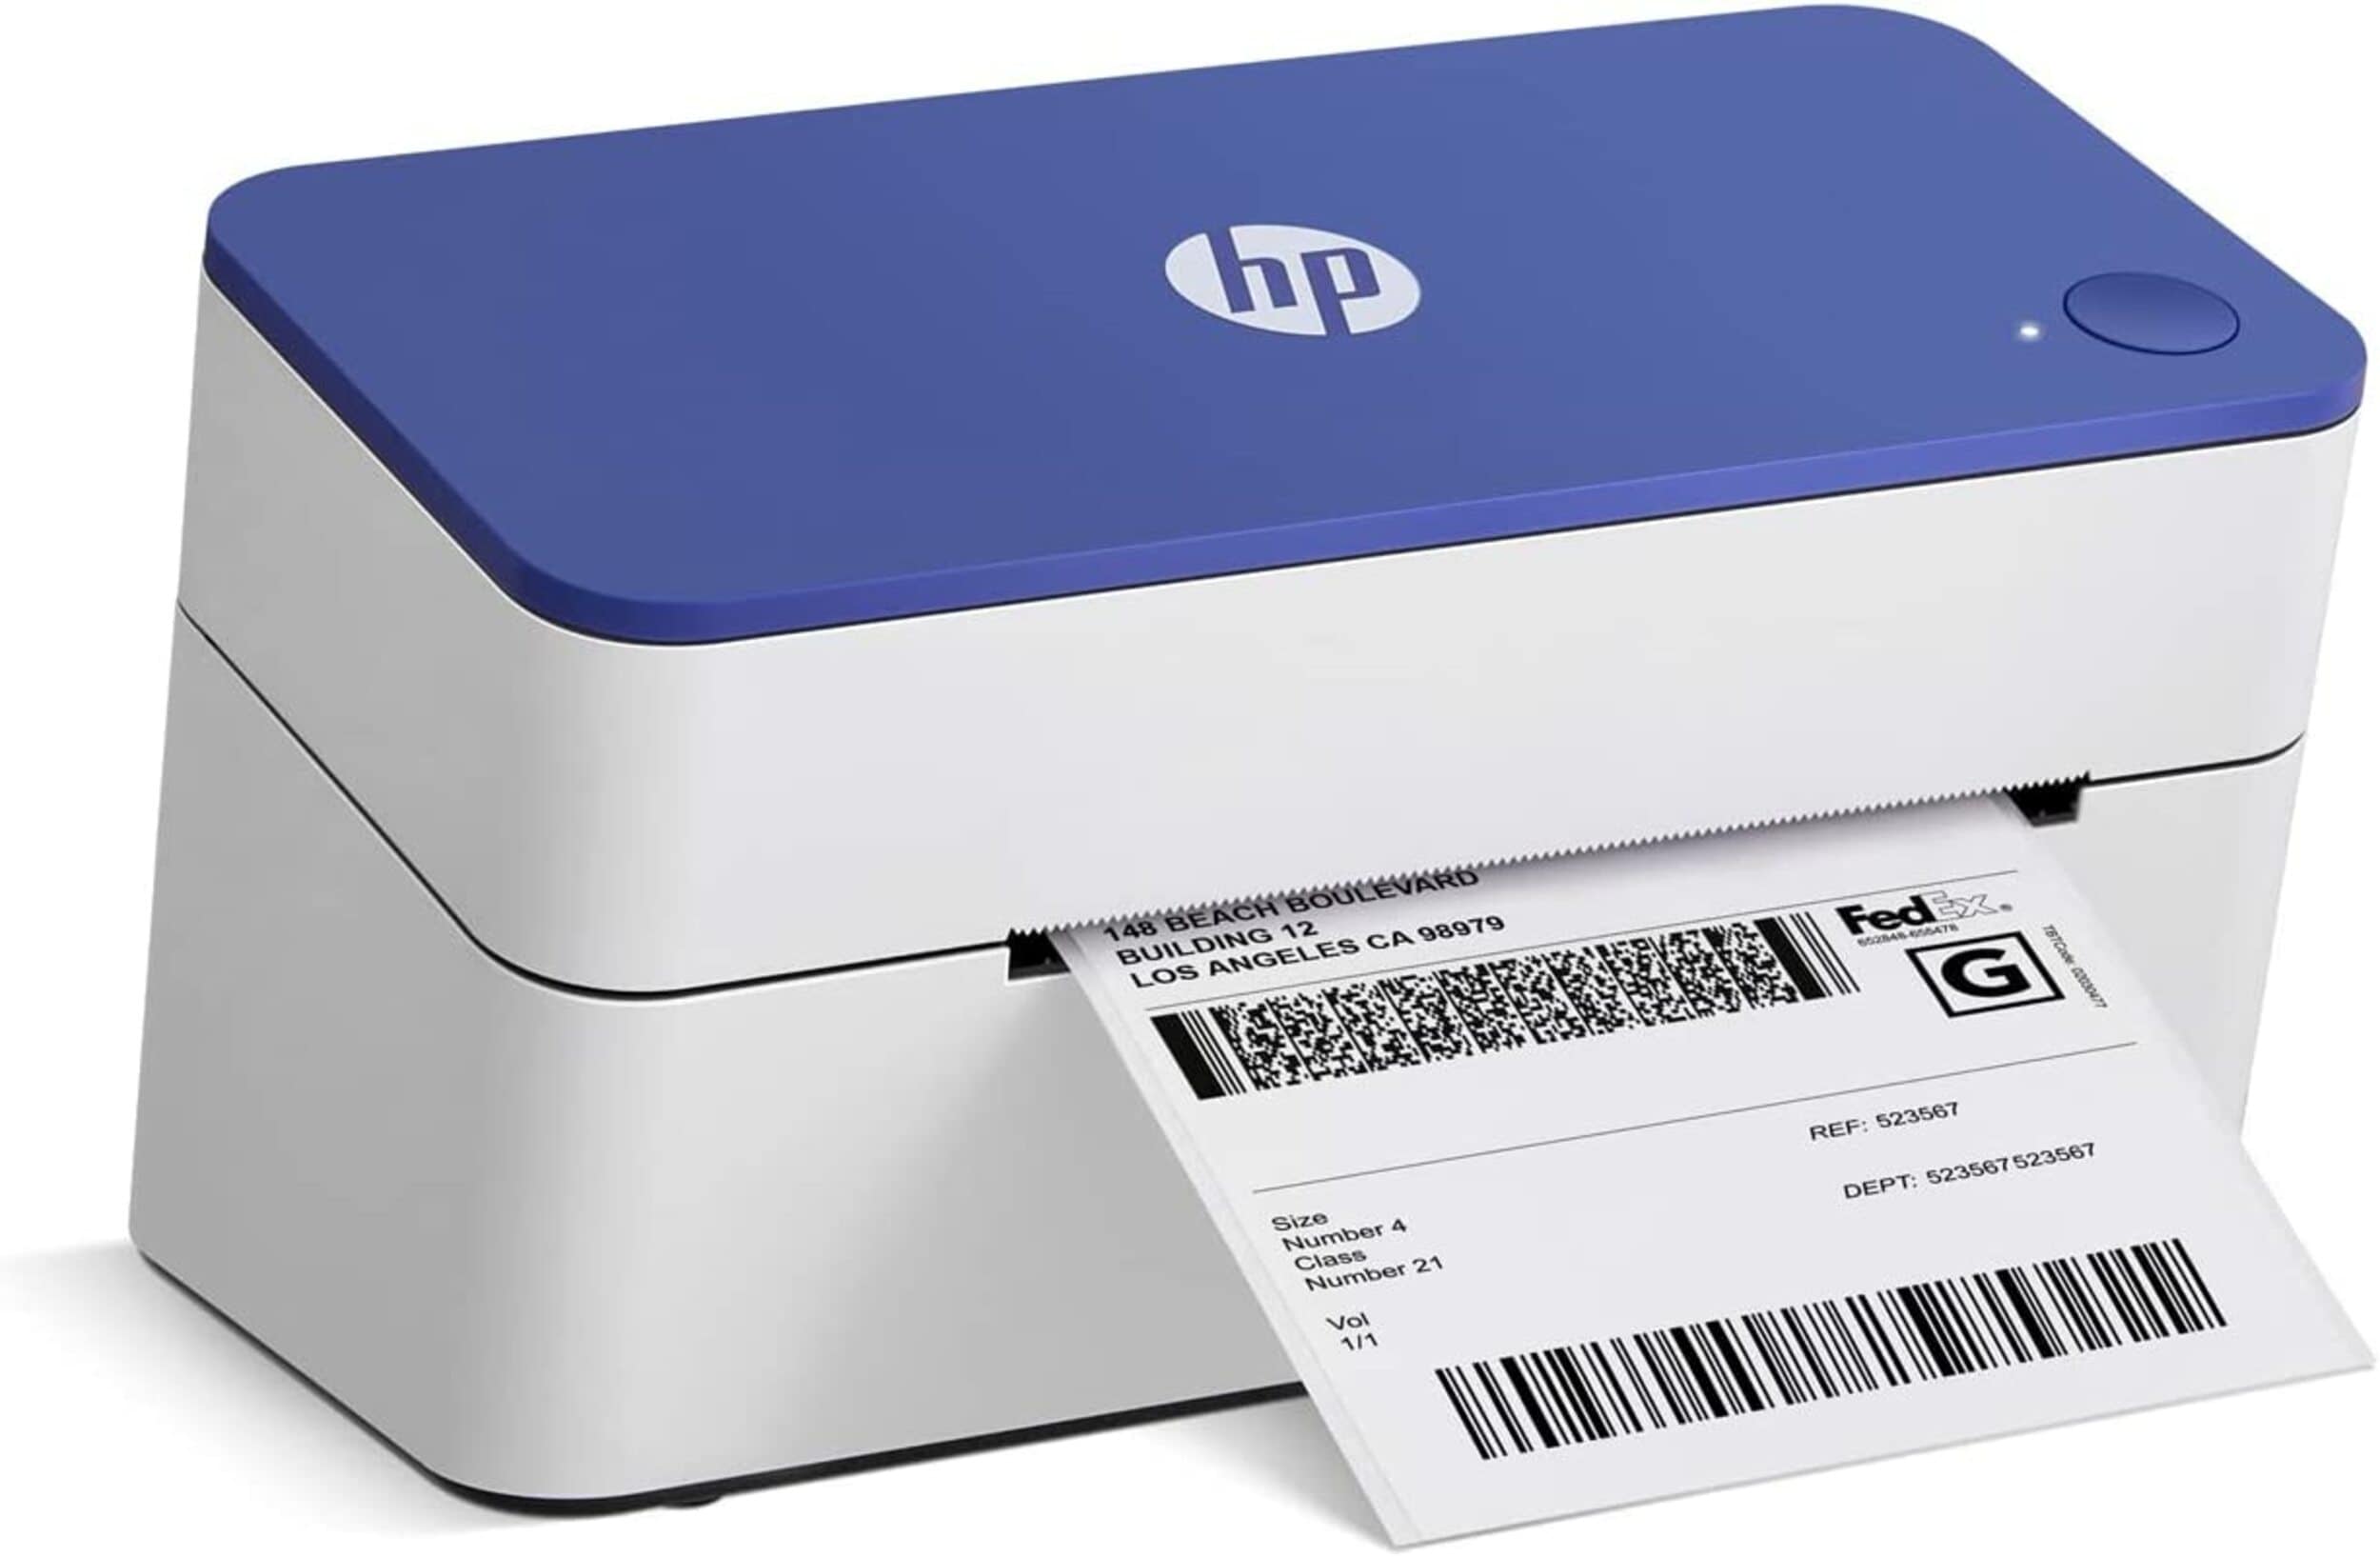 HP HP Shipping Label Printer, 4x6 Compact Thermal Label Printer